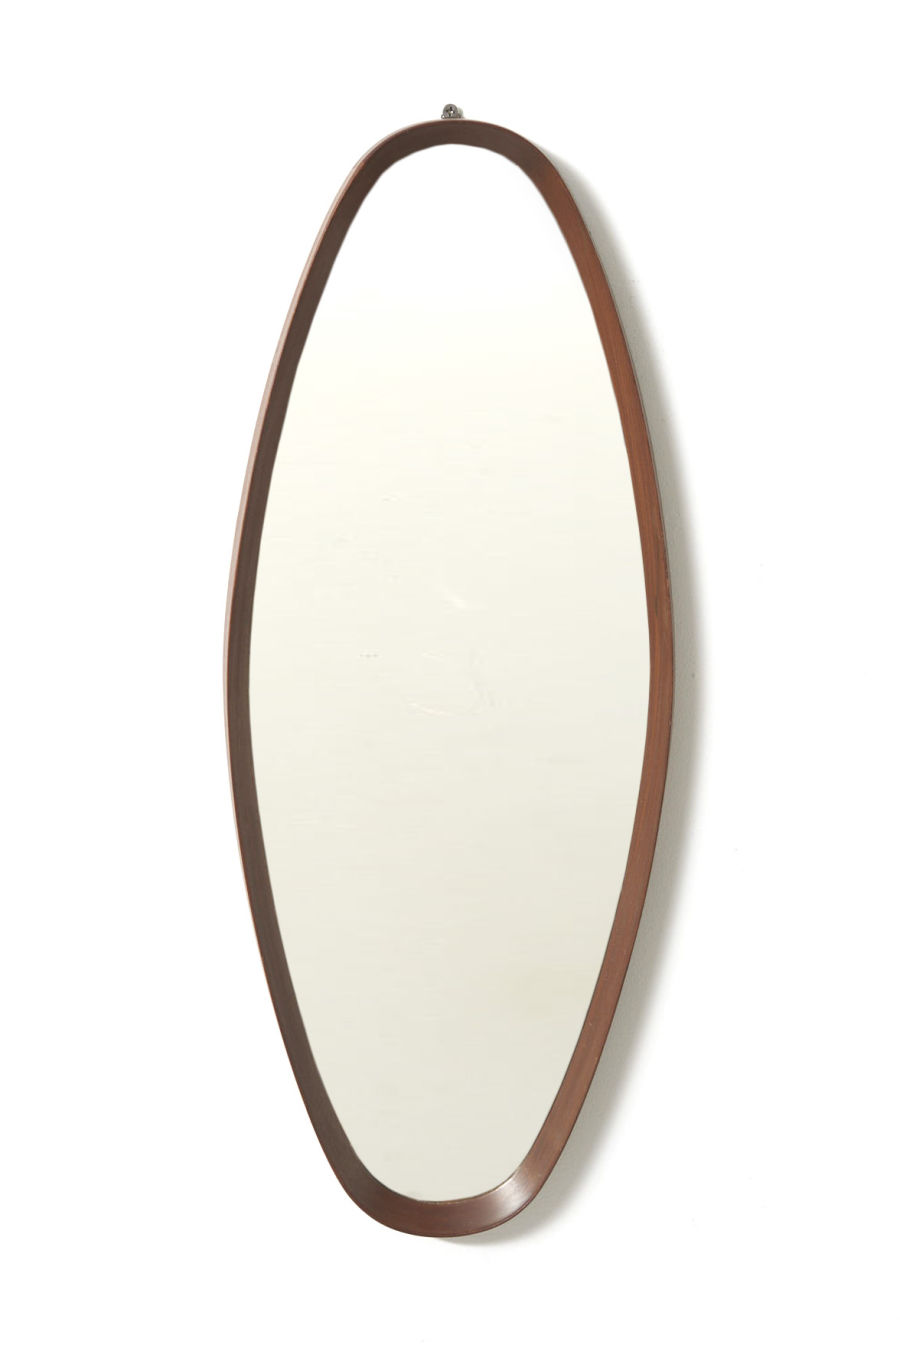 modestfurniture-vintage-2523-oval-mirror-teak02